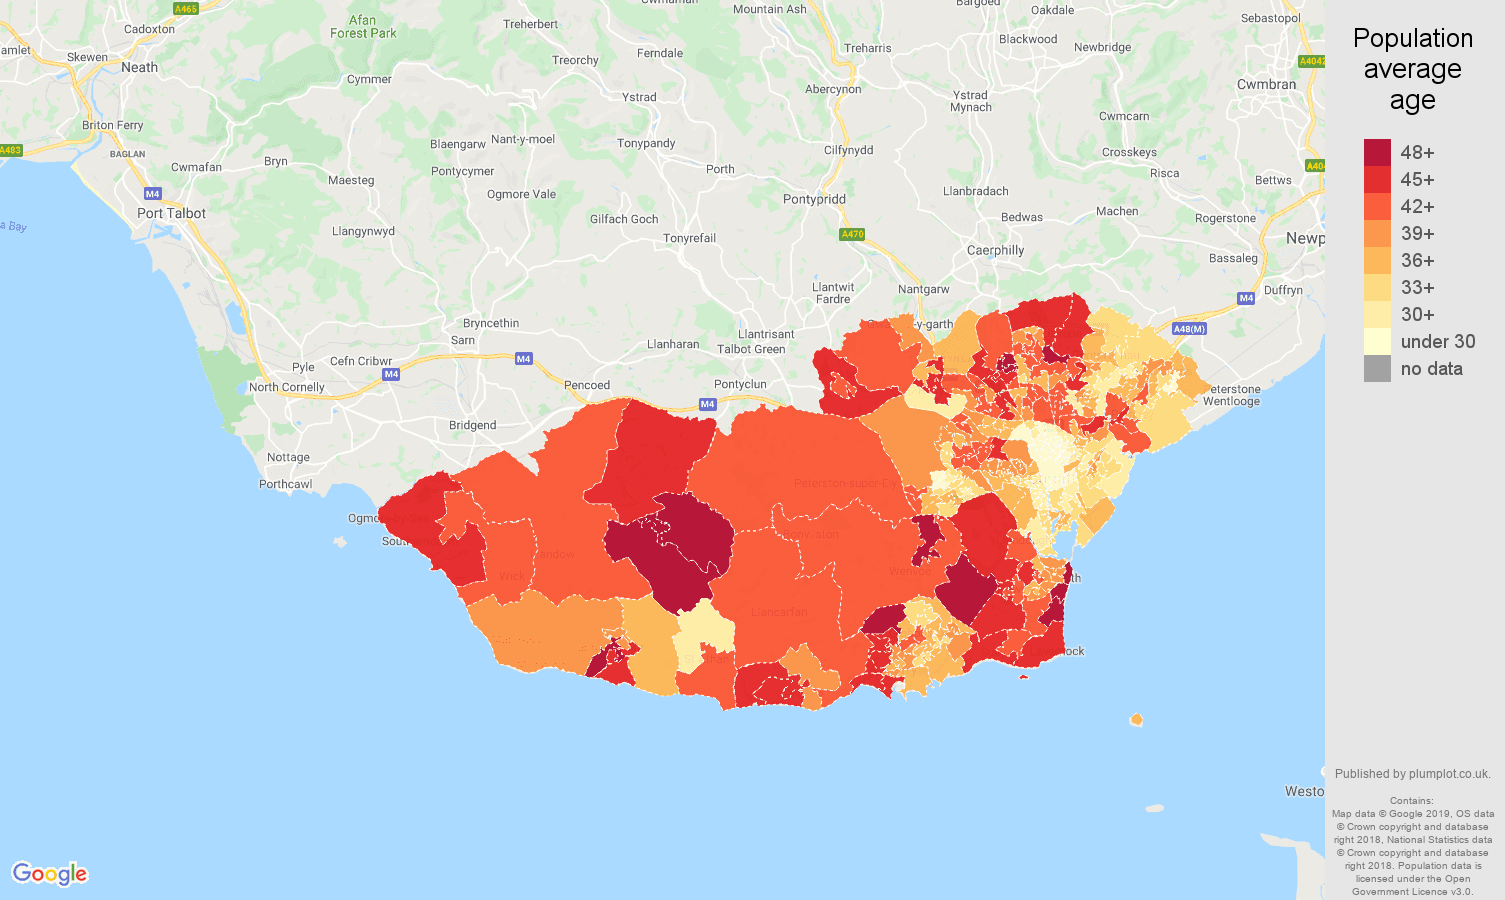 South Glamorgan population average age map